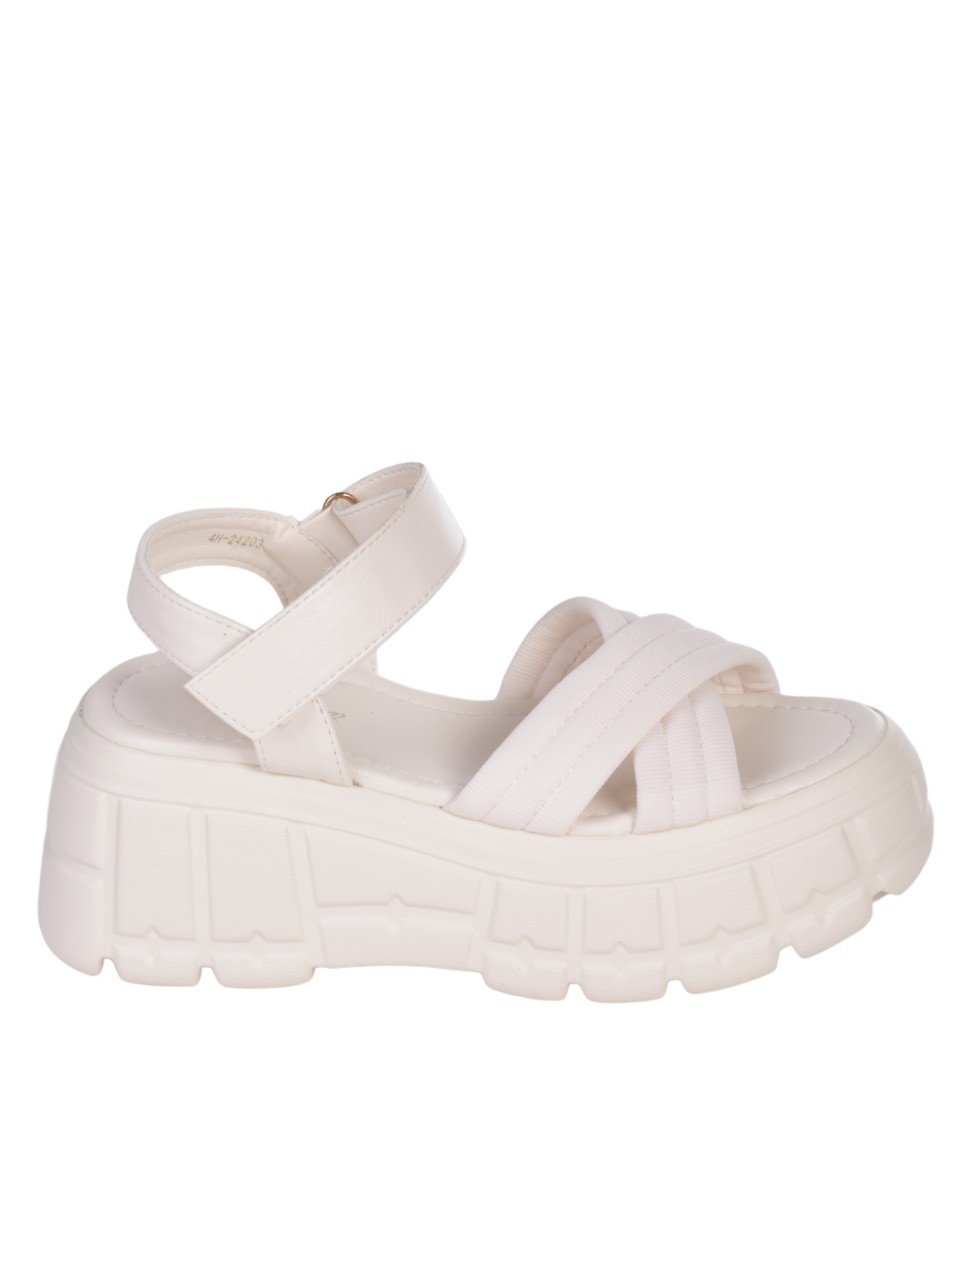 Ежедневни дамски сандали на платформа в бяло 4H-24203 off white